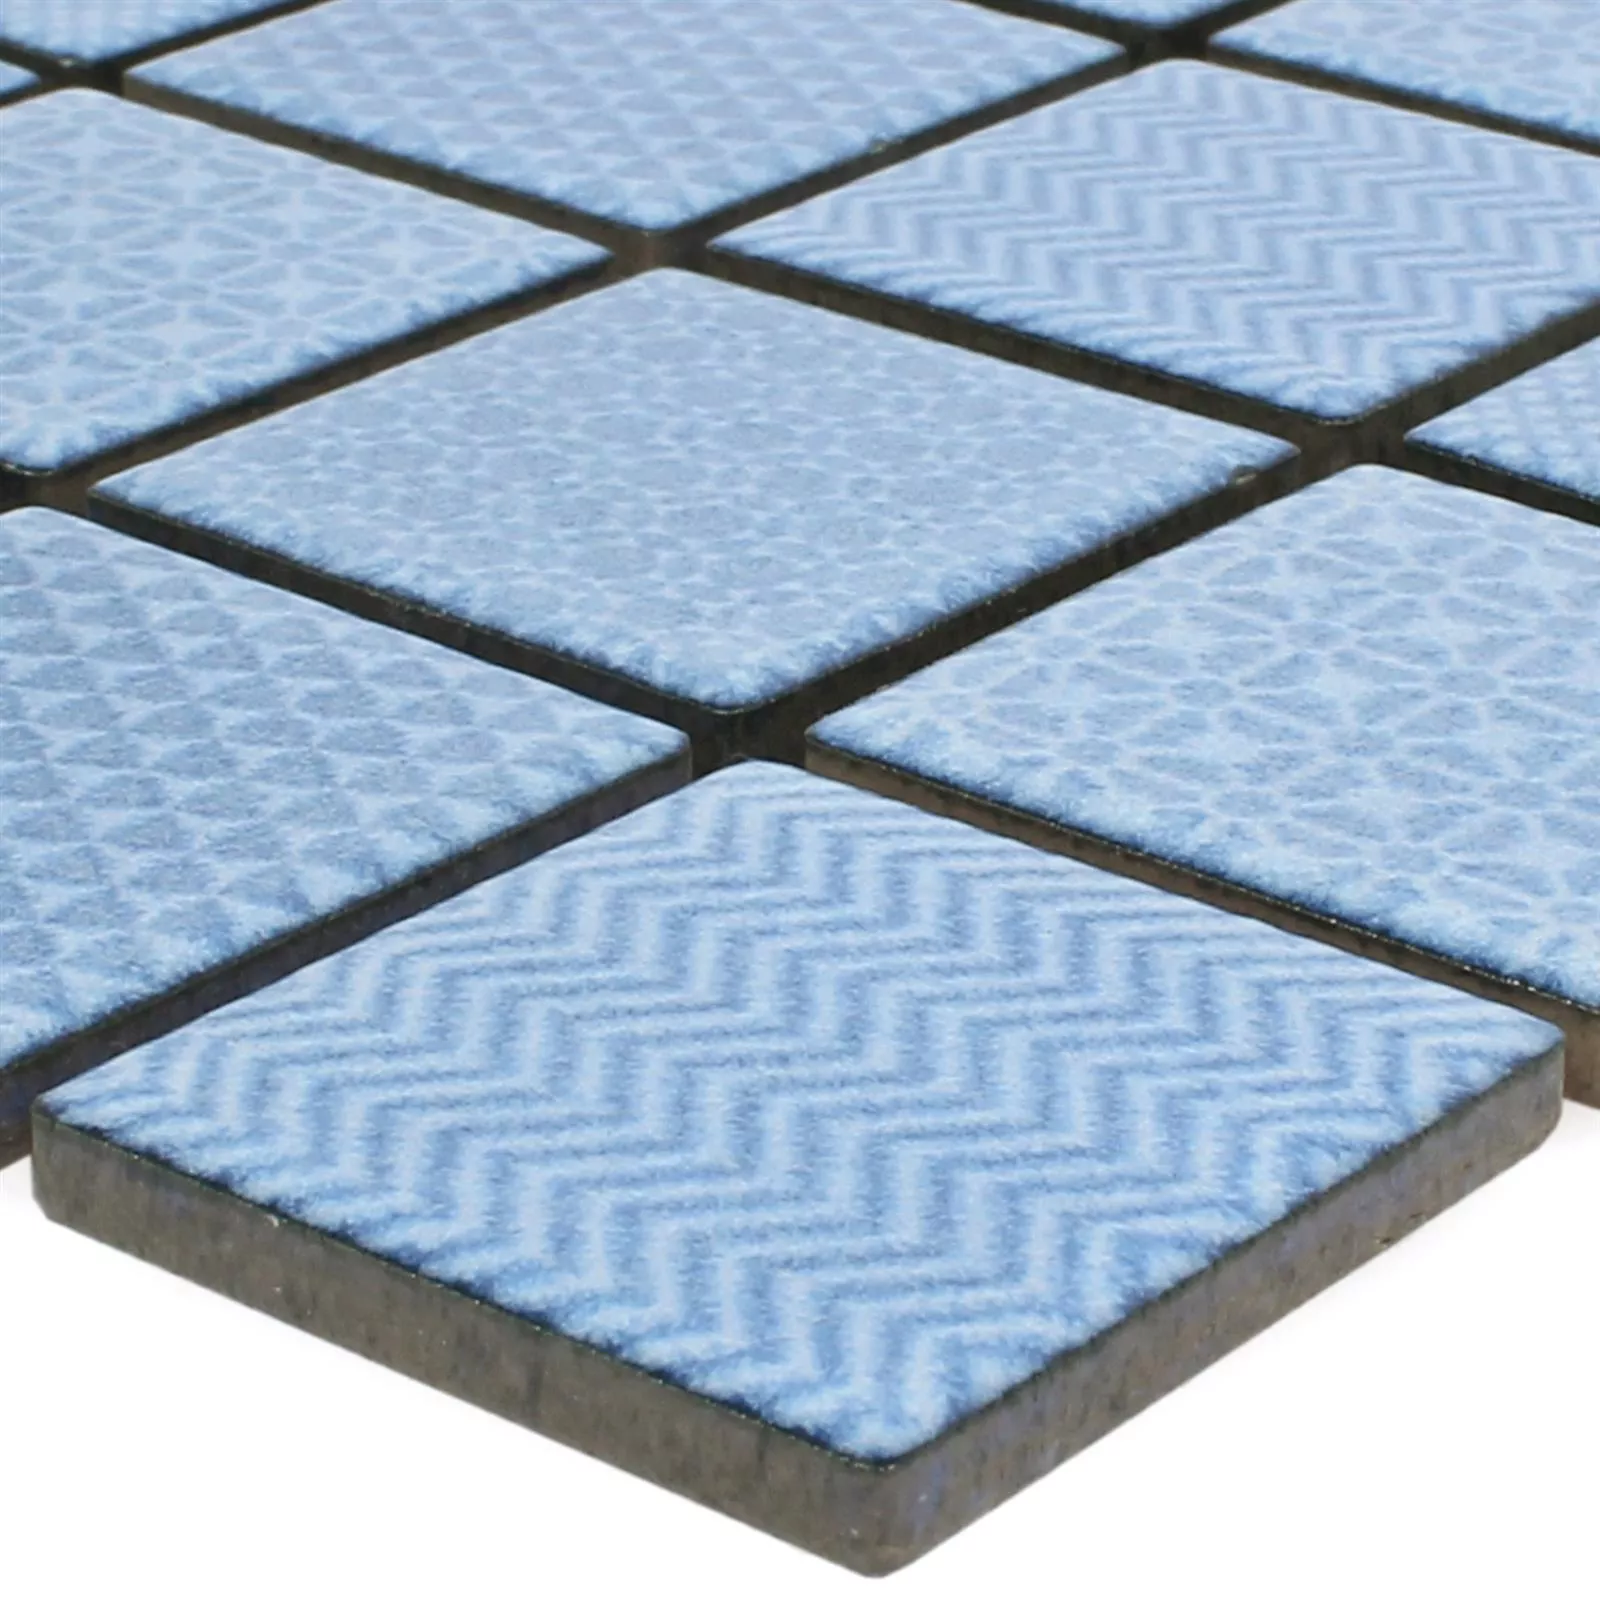 Sample Mosaic Tiles Ceramic Sapporo Blue